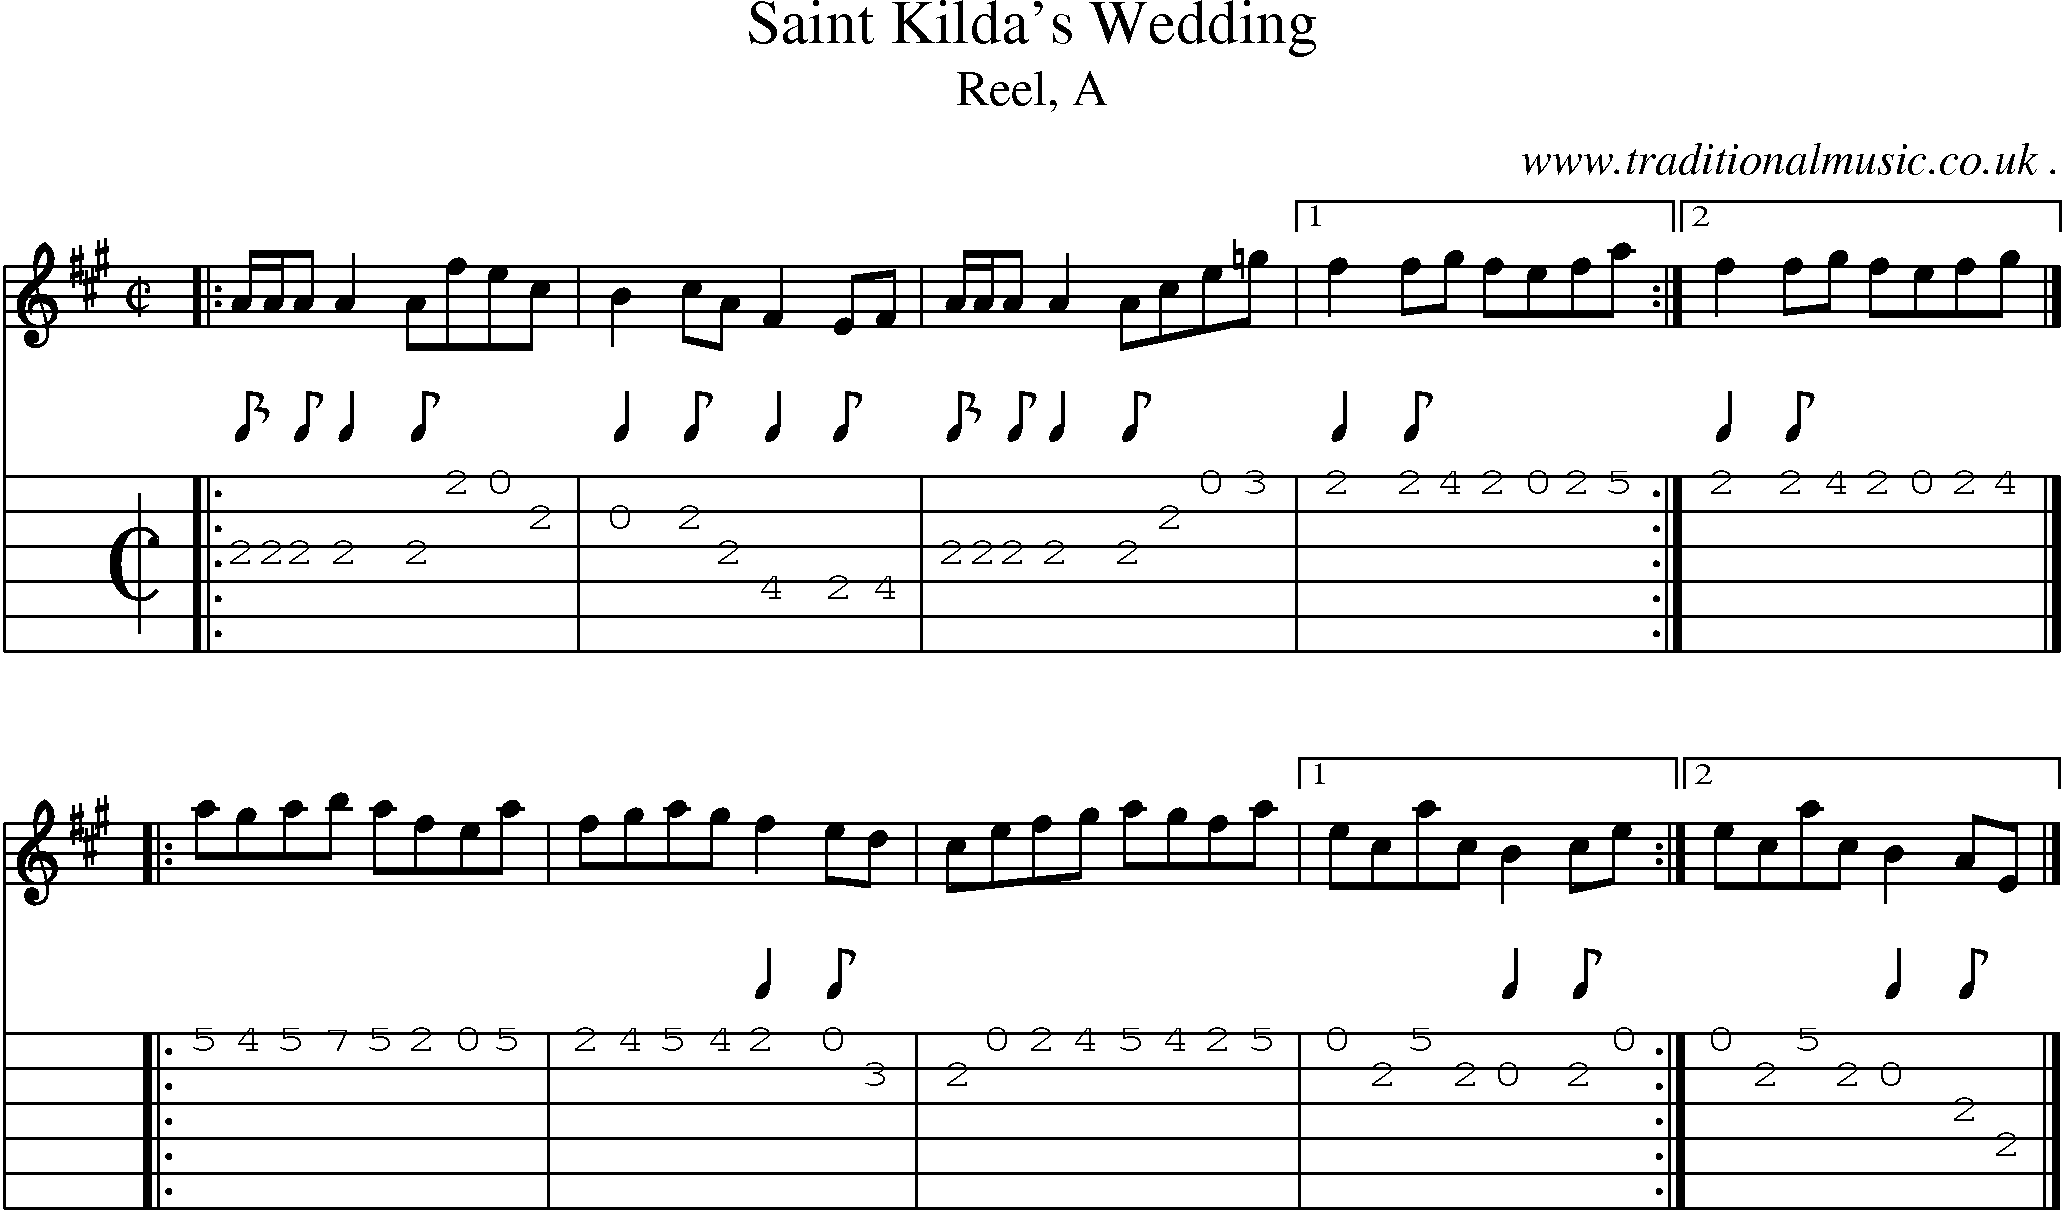 Sheet-music  score, Chords and Guitar Tabs for Saint Kildas Wedding